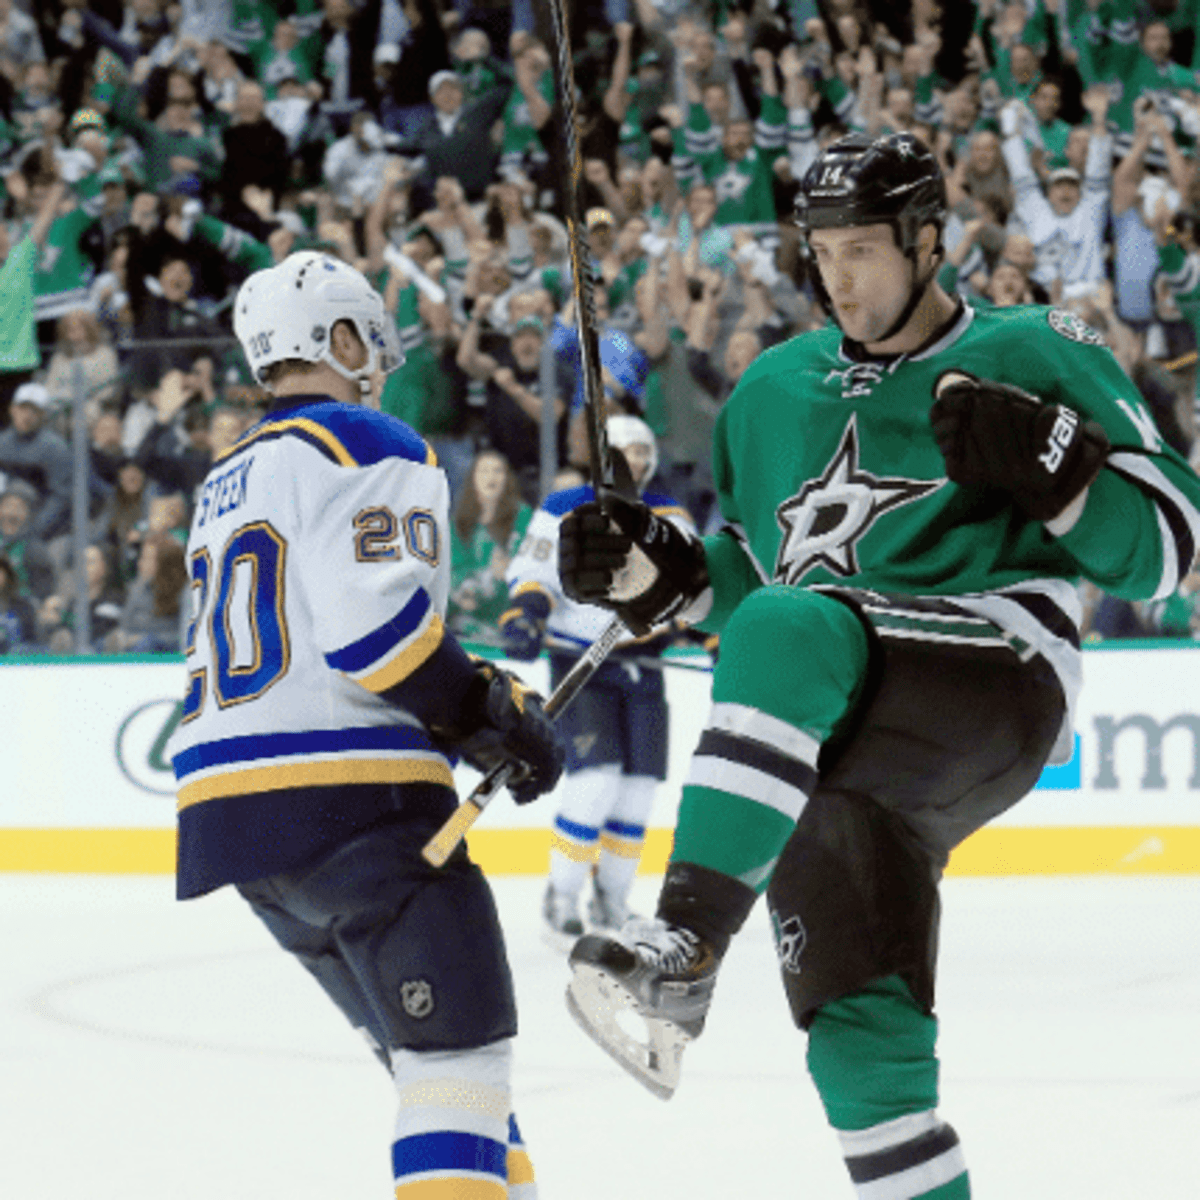 Jamie Benn's rise to NHL stardom almost never happened